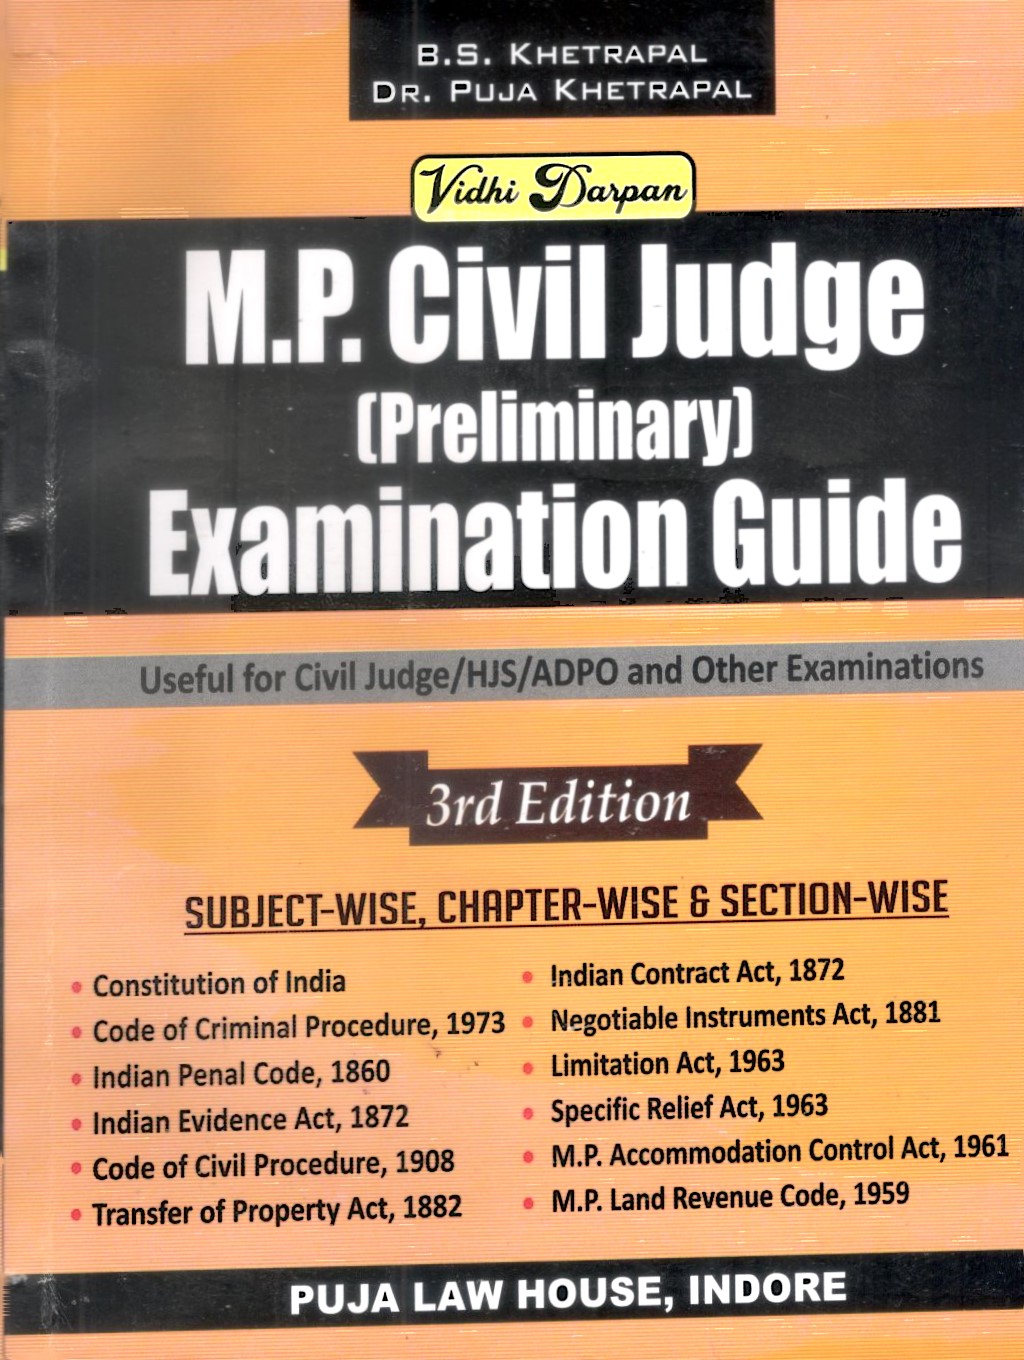 Vidhi Darpan M.P. Civil Judge (Preliminary) Examination Guide